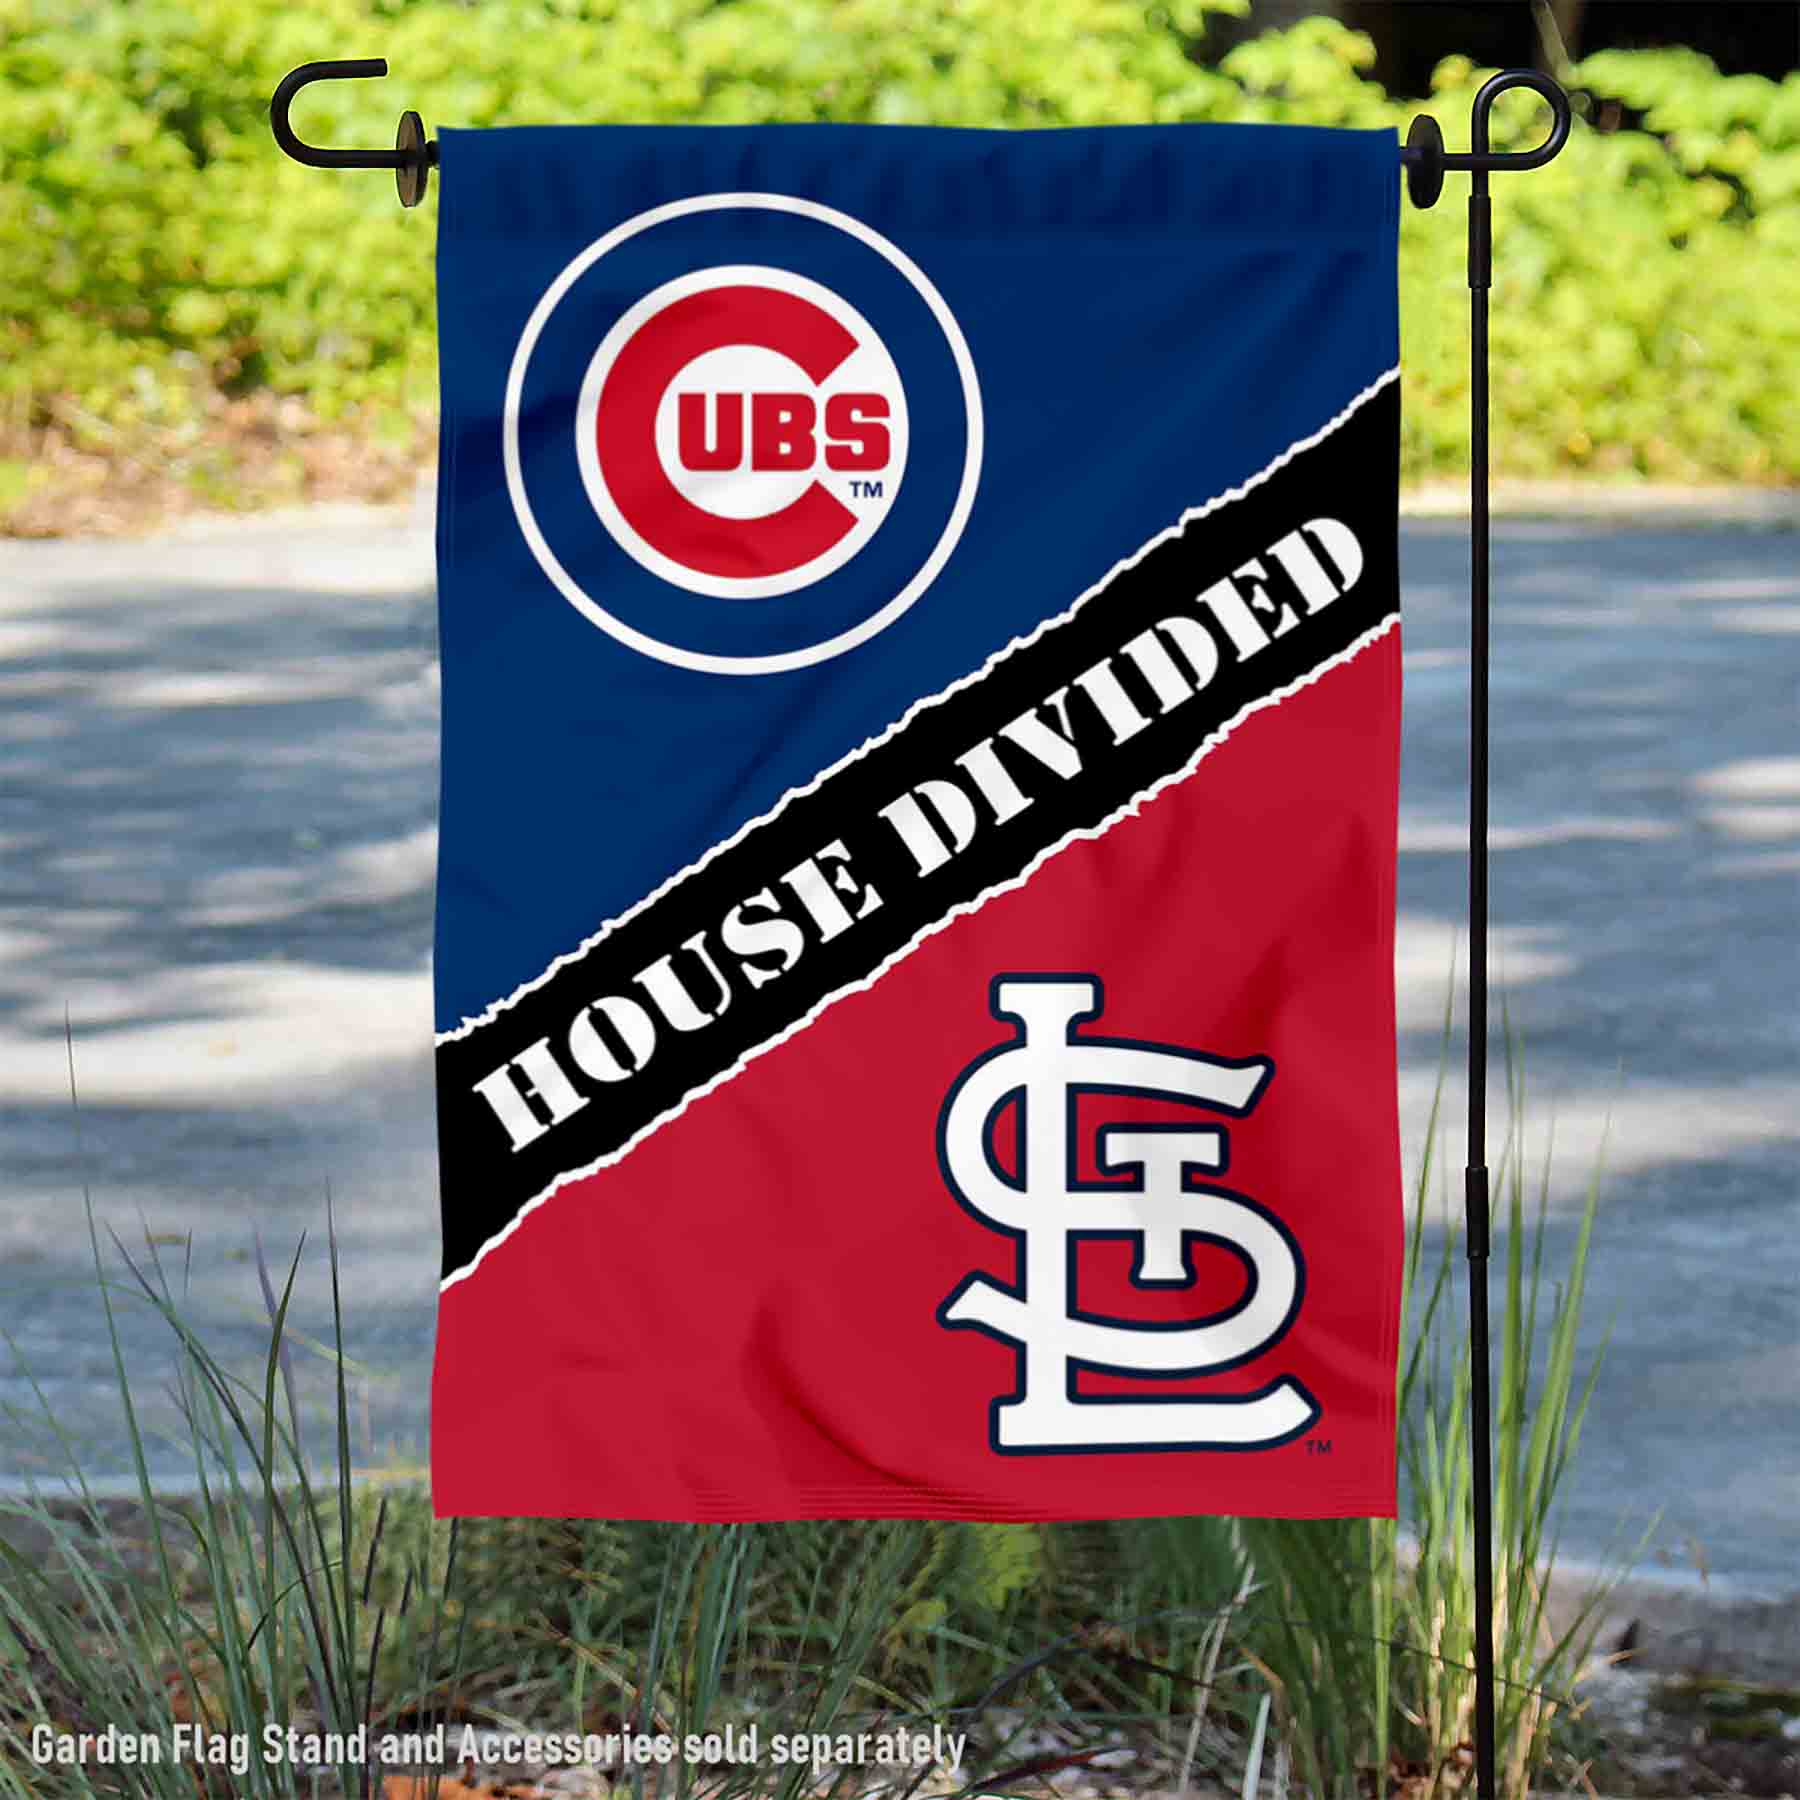 Chicago Cubs vs St. Louis Cardinals House Divided Garden Flag